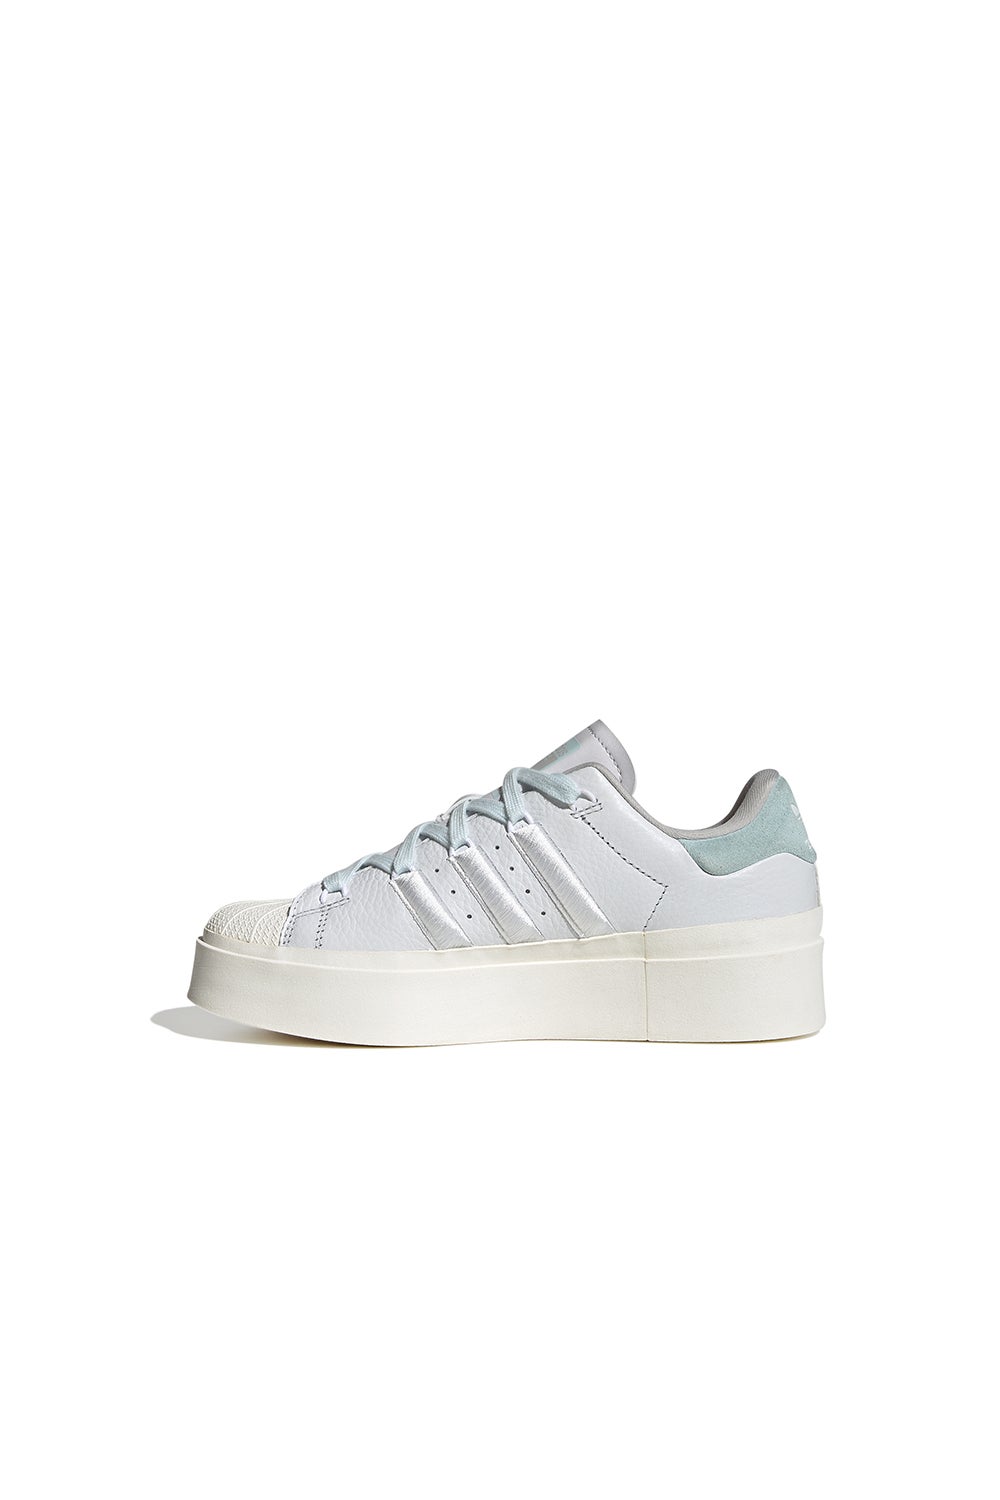 Adidas Superstar Bonega W Shoes Crystal White/almost Blue | Karen